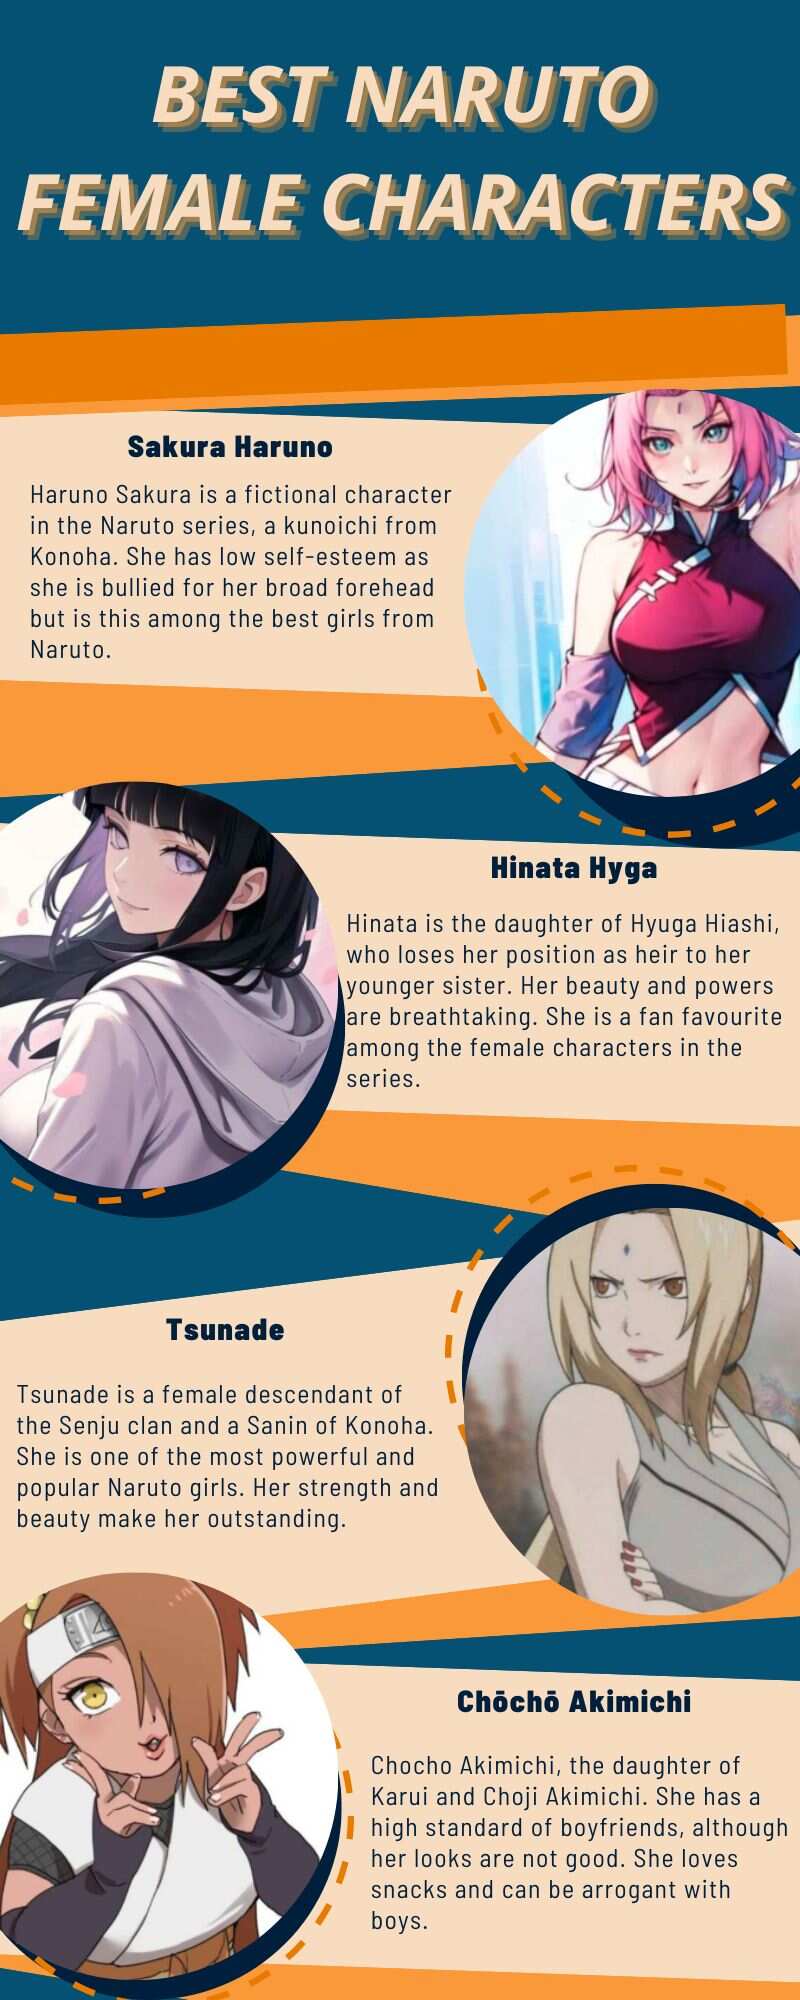 Best Naruto female characters